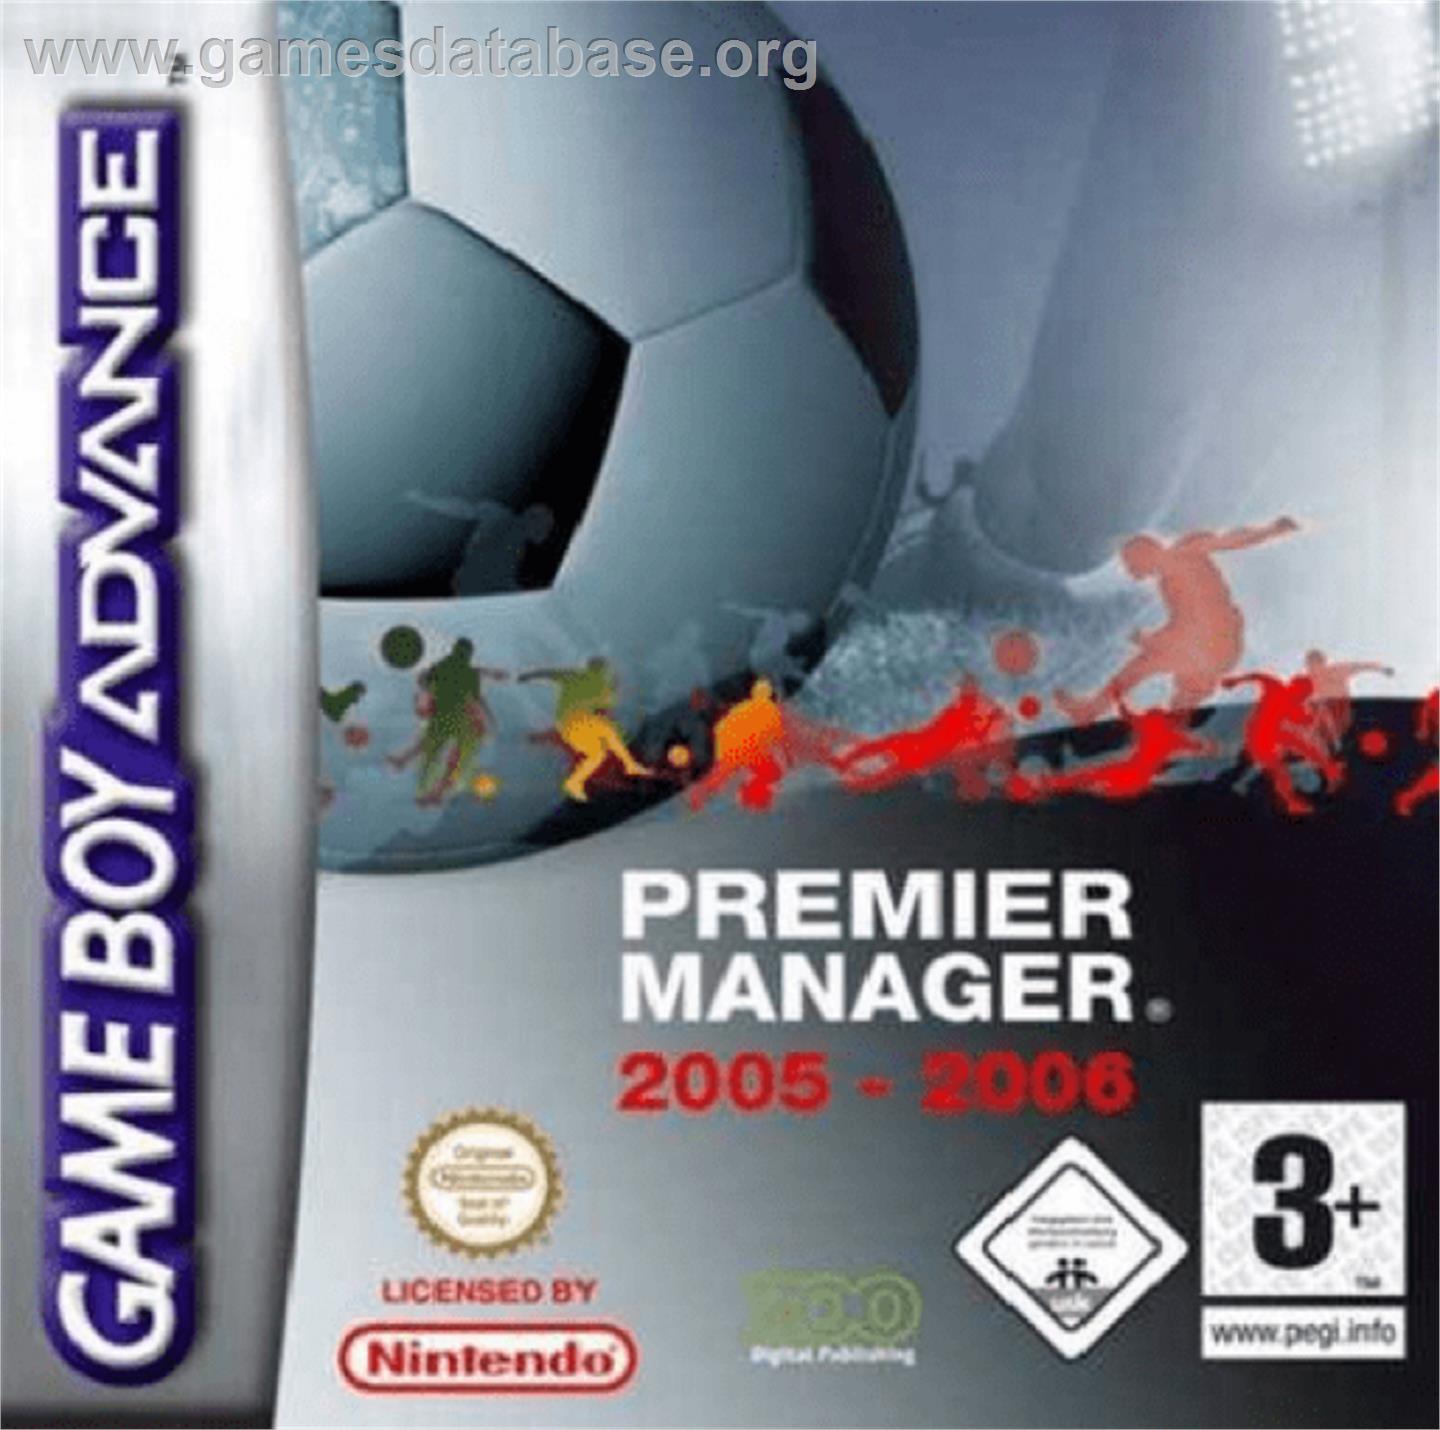 Premier Manager 2005-2006 - Nintendo Game Boy Advance - Artwork - Box